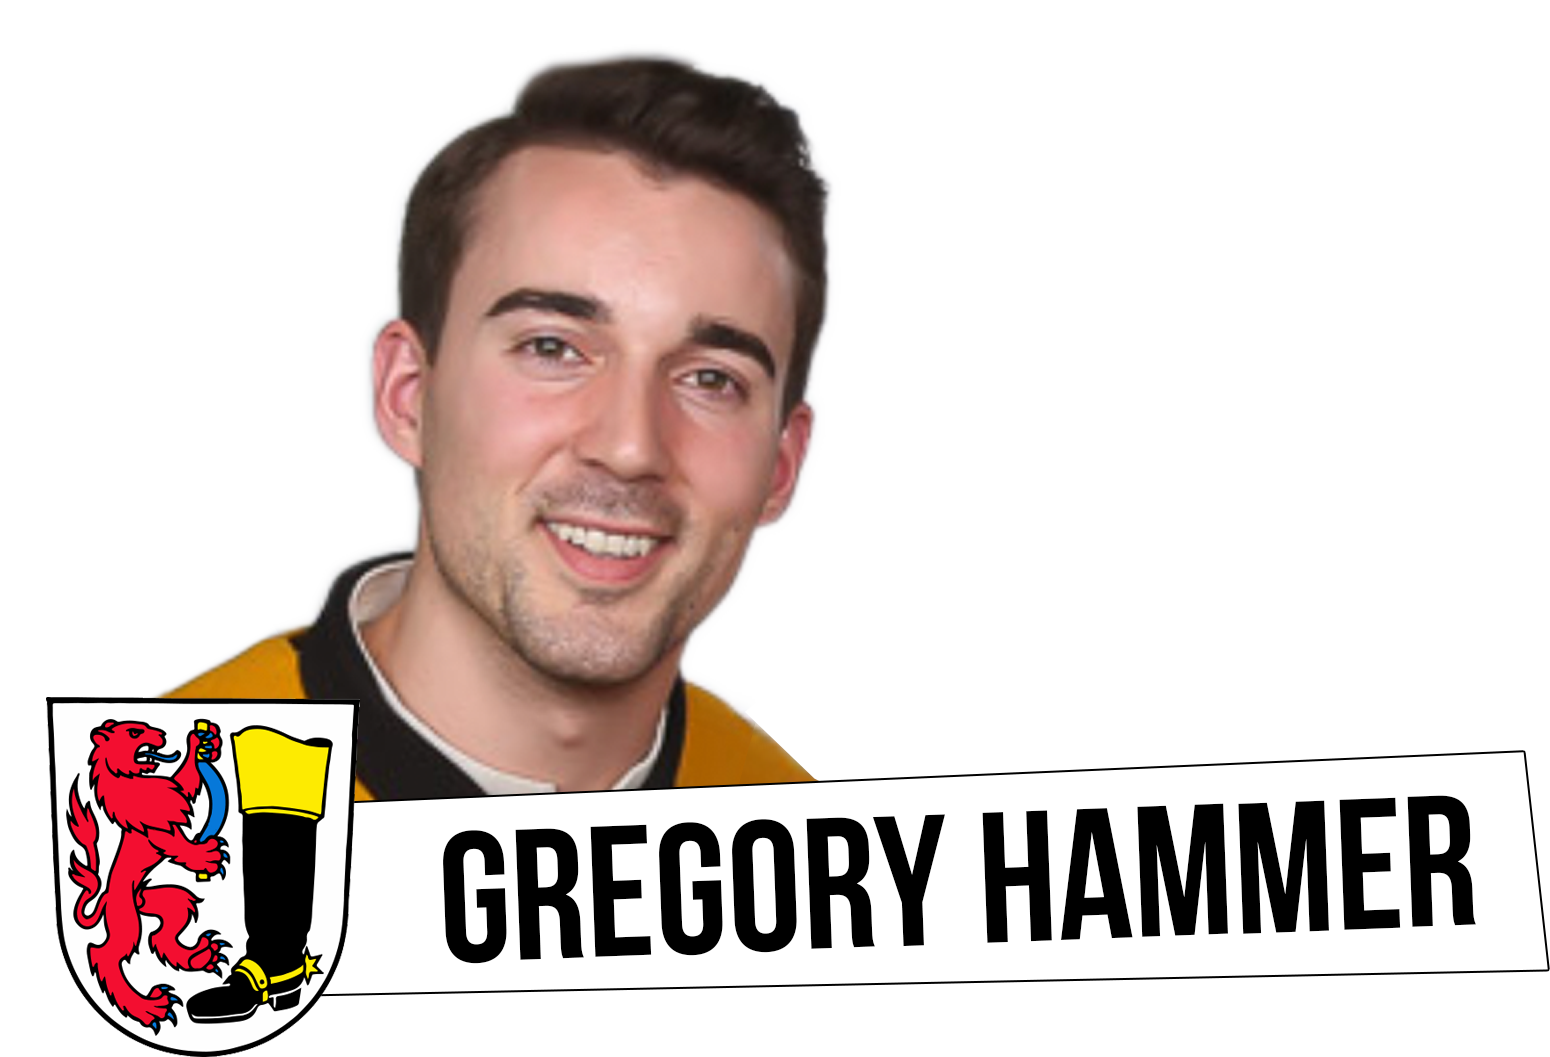 Gregory Hammer